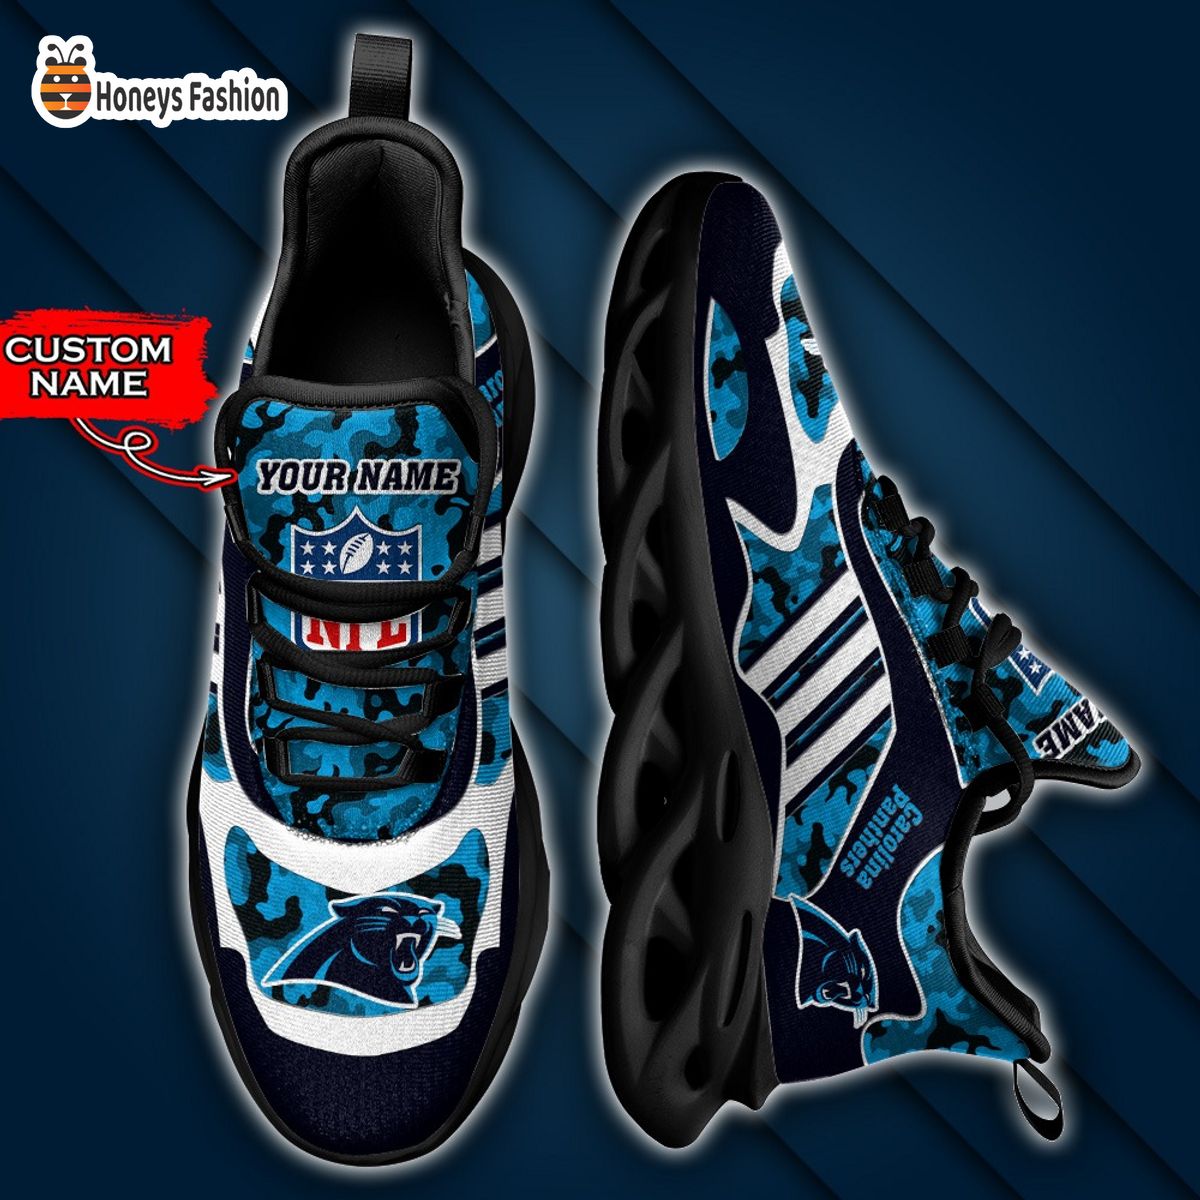 Carolina Panthers NFL Adidas Personalized Max Soul Shoes